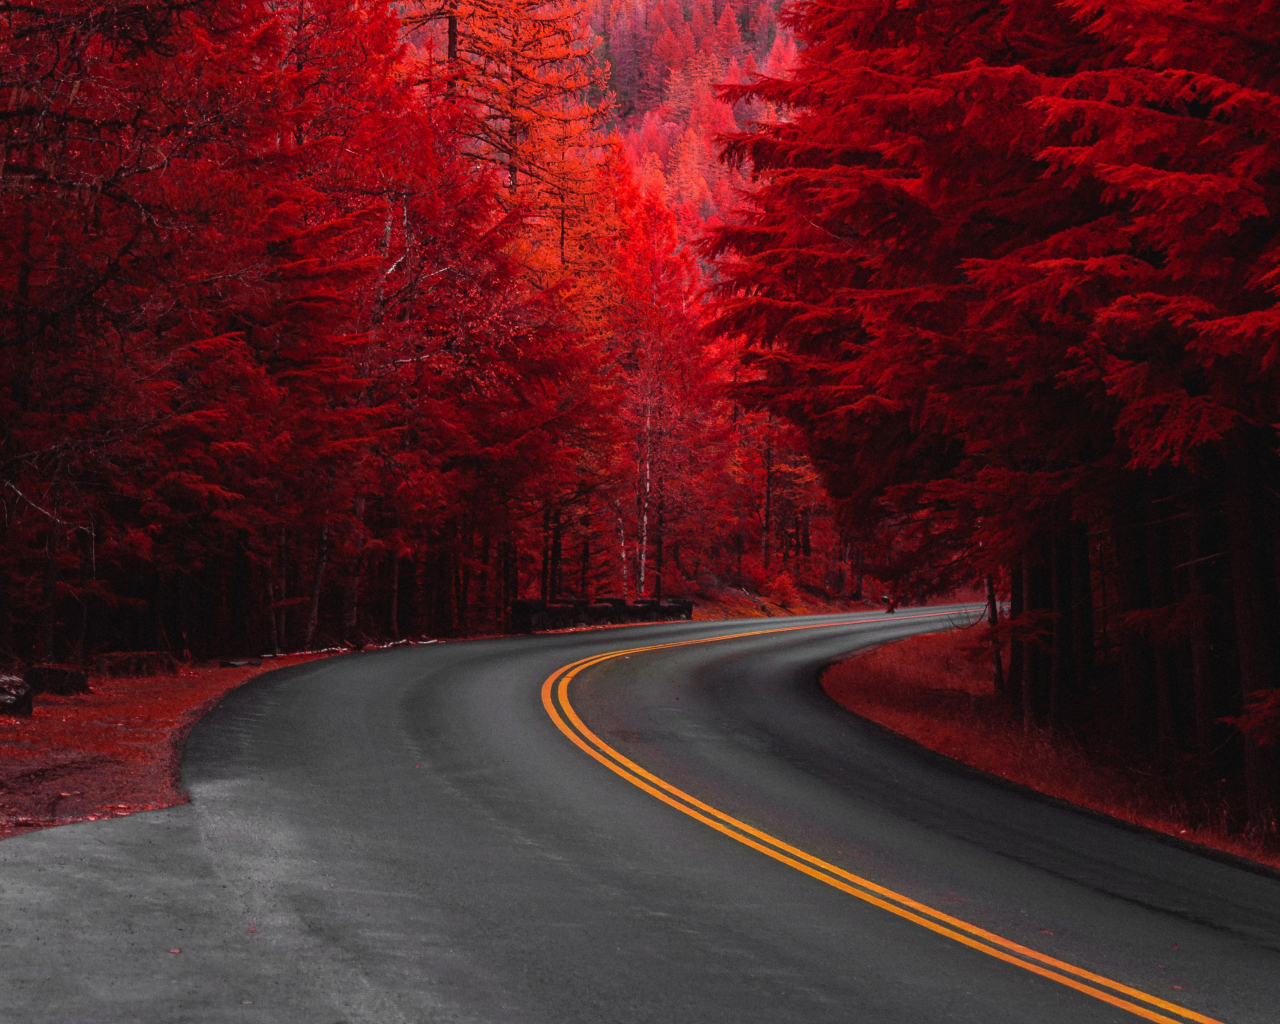 Download wallpaper 1280x1024 road through pine trees, red, standard 5:4 fullscreen wallpaper, 1280x1024 HD background, 23925